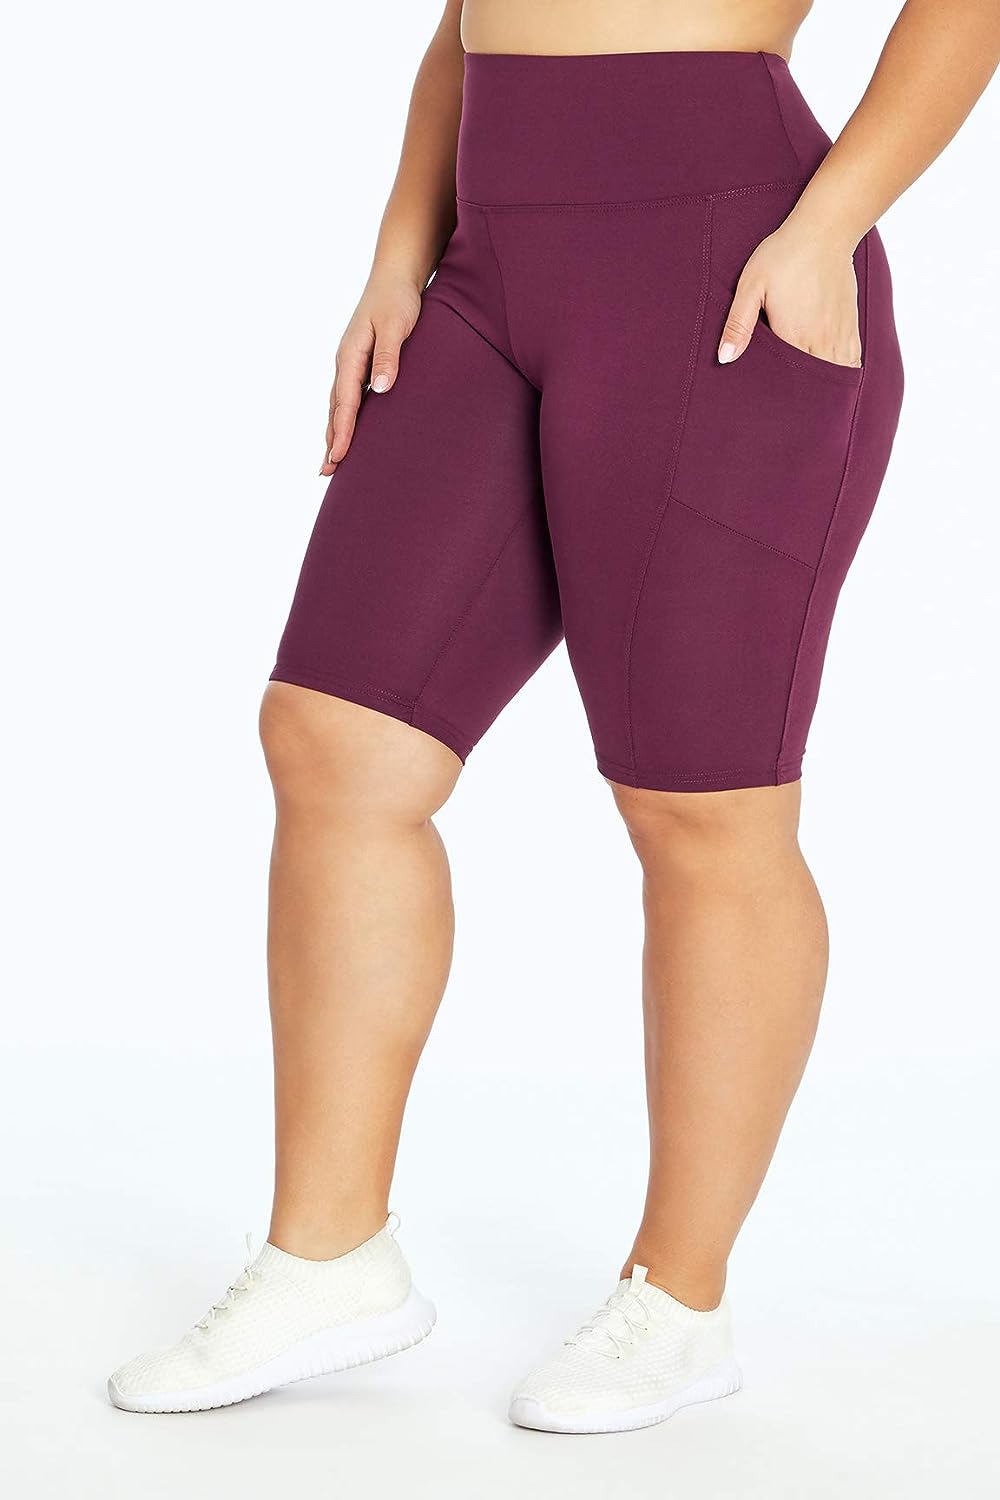 Marika Women's Plus Size Olivia Tummy Control Pocket Bermuda Short